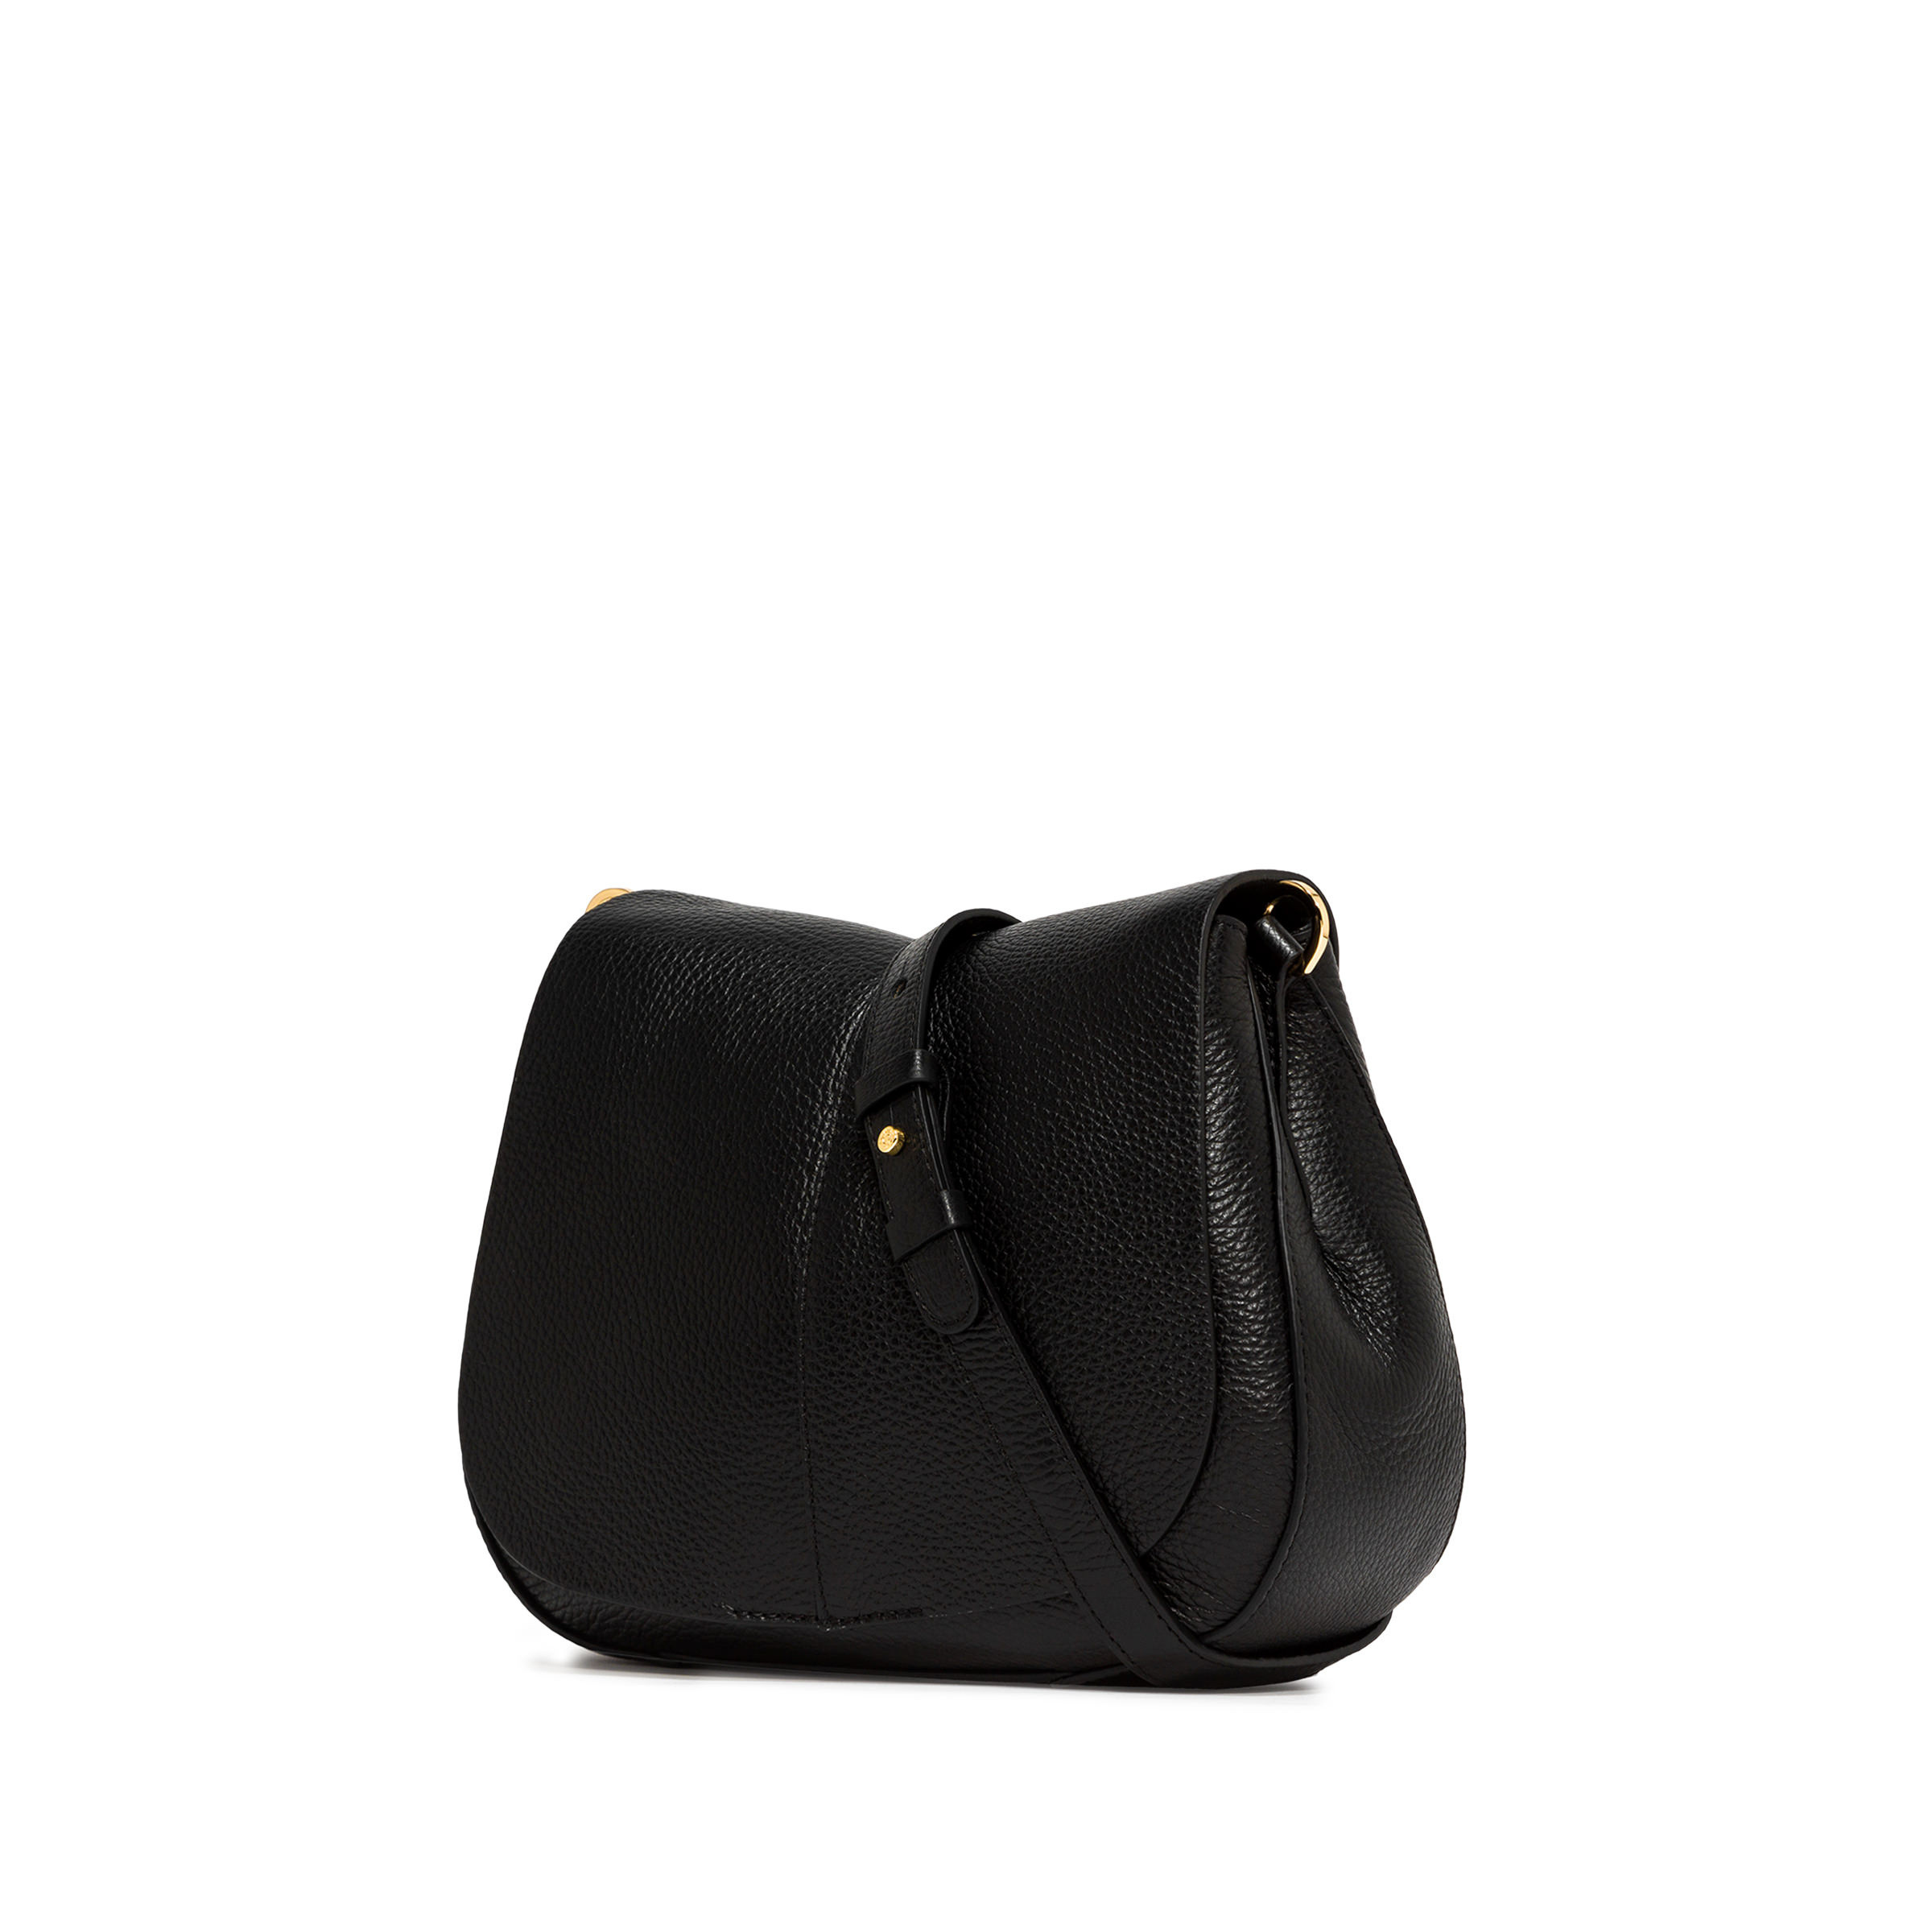 Gianni Chiarini - Helena Round bag in leather, Black, large image number 2